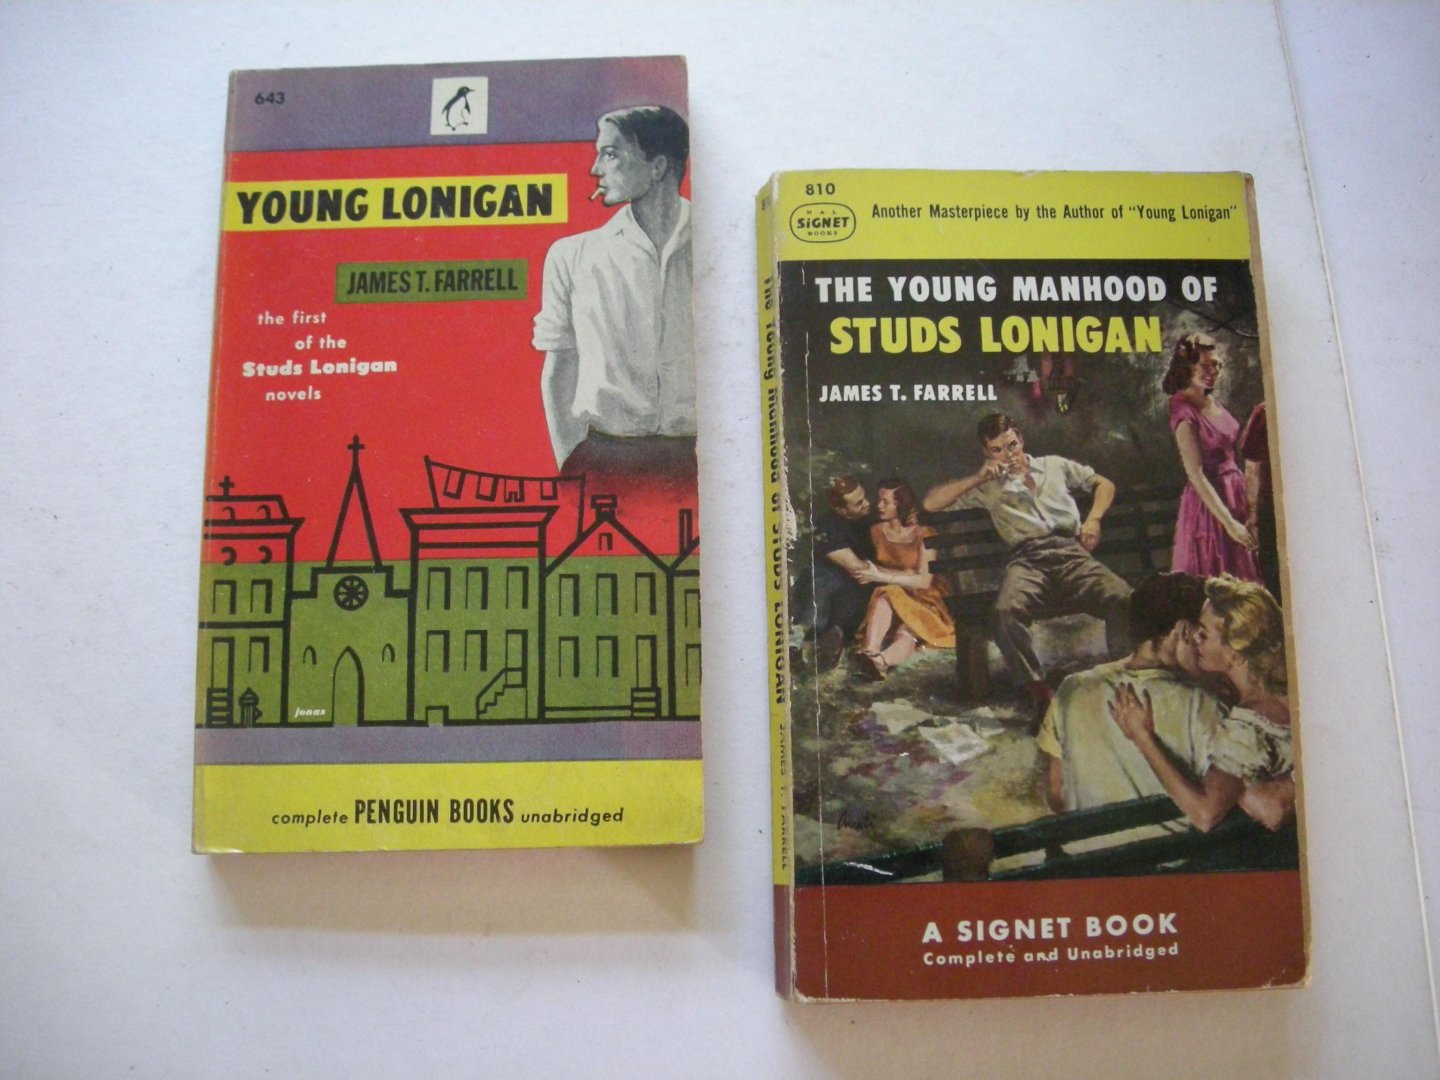 Farrell, James T. - Young Lonigan (1sr of Studs Lonigan trilogy)